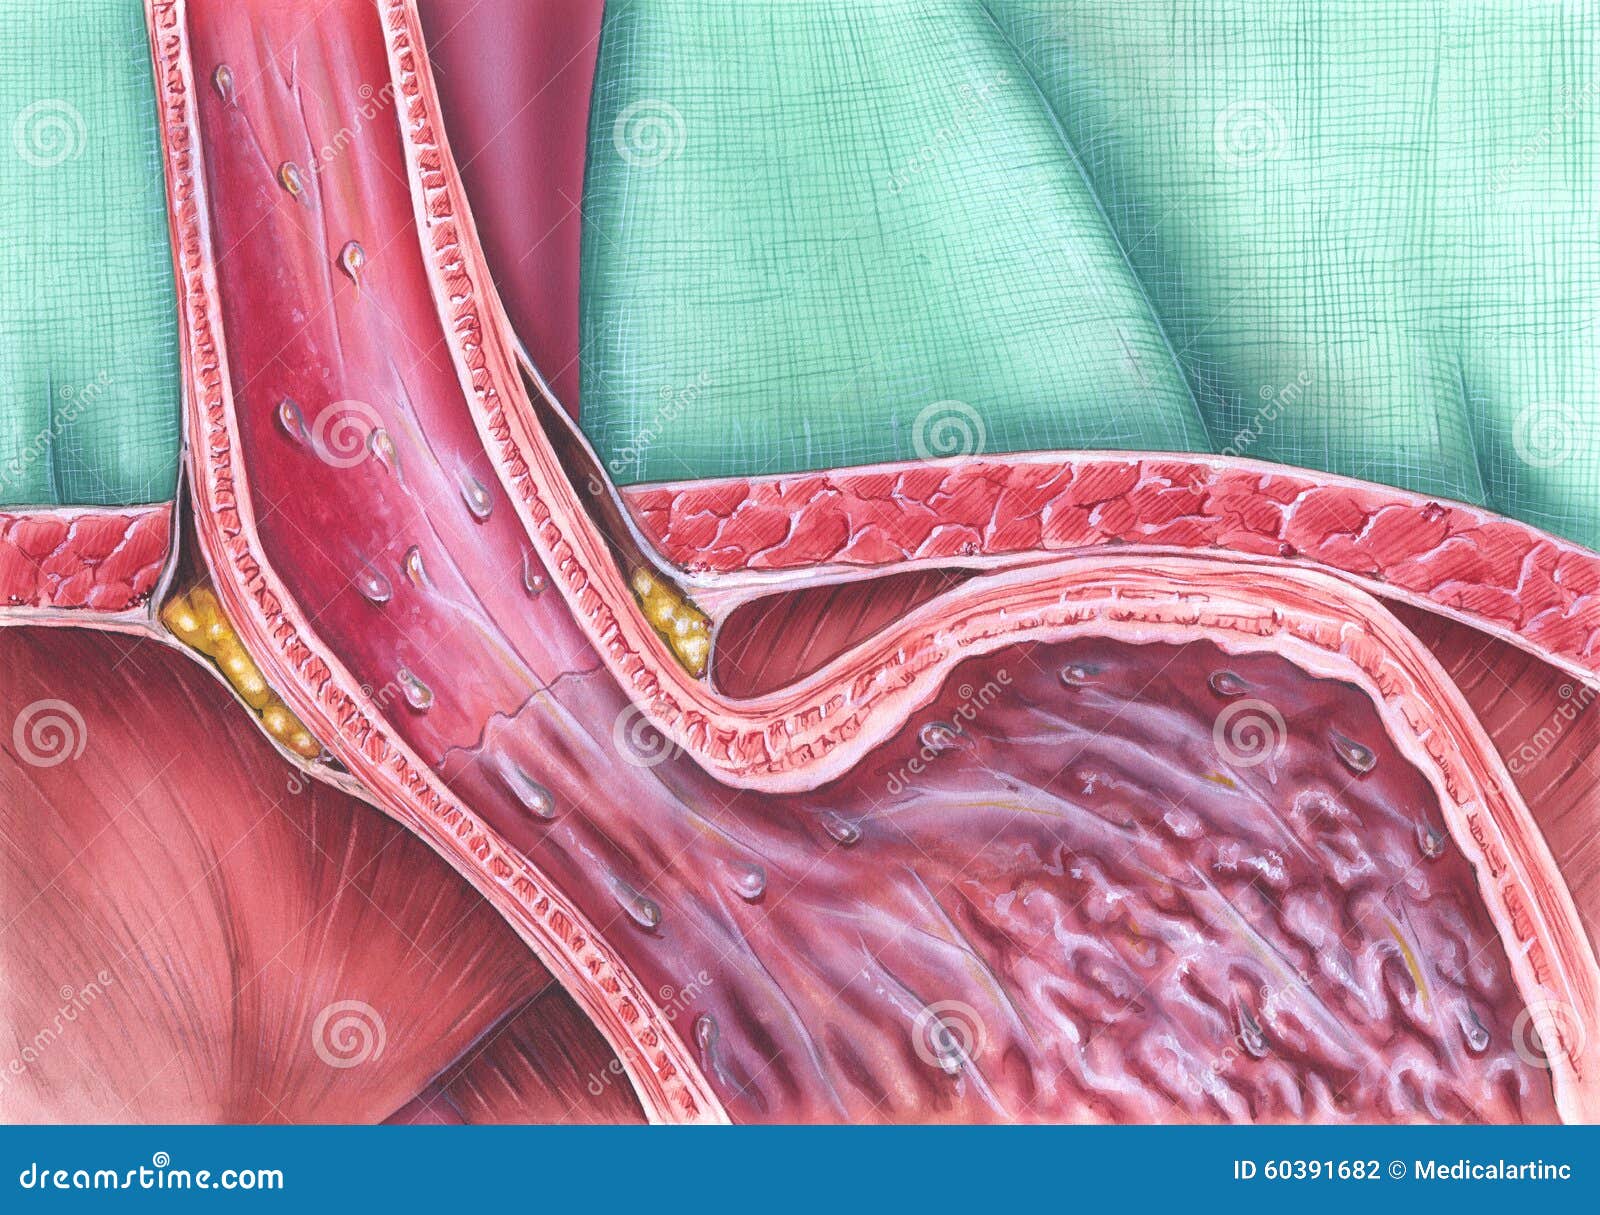 Gastroesophageal Reflux Disease Stock Photo - Image: 60391682